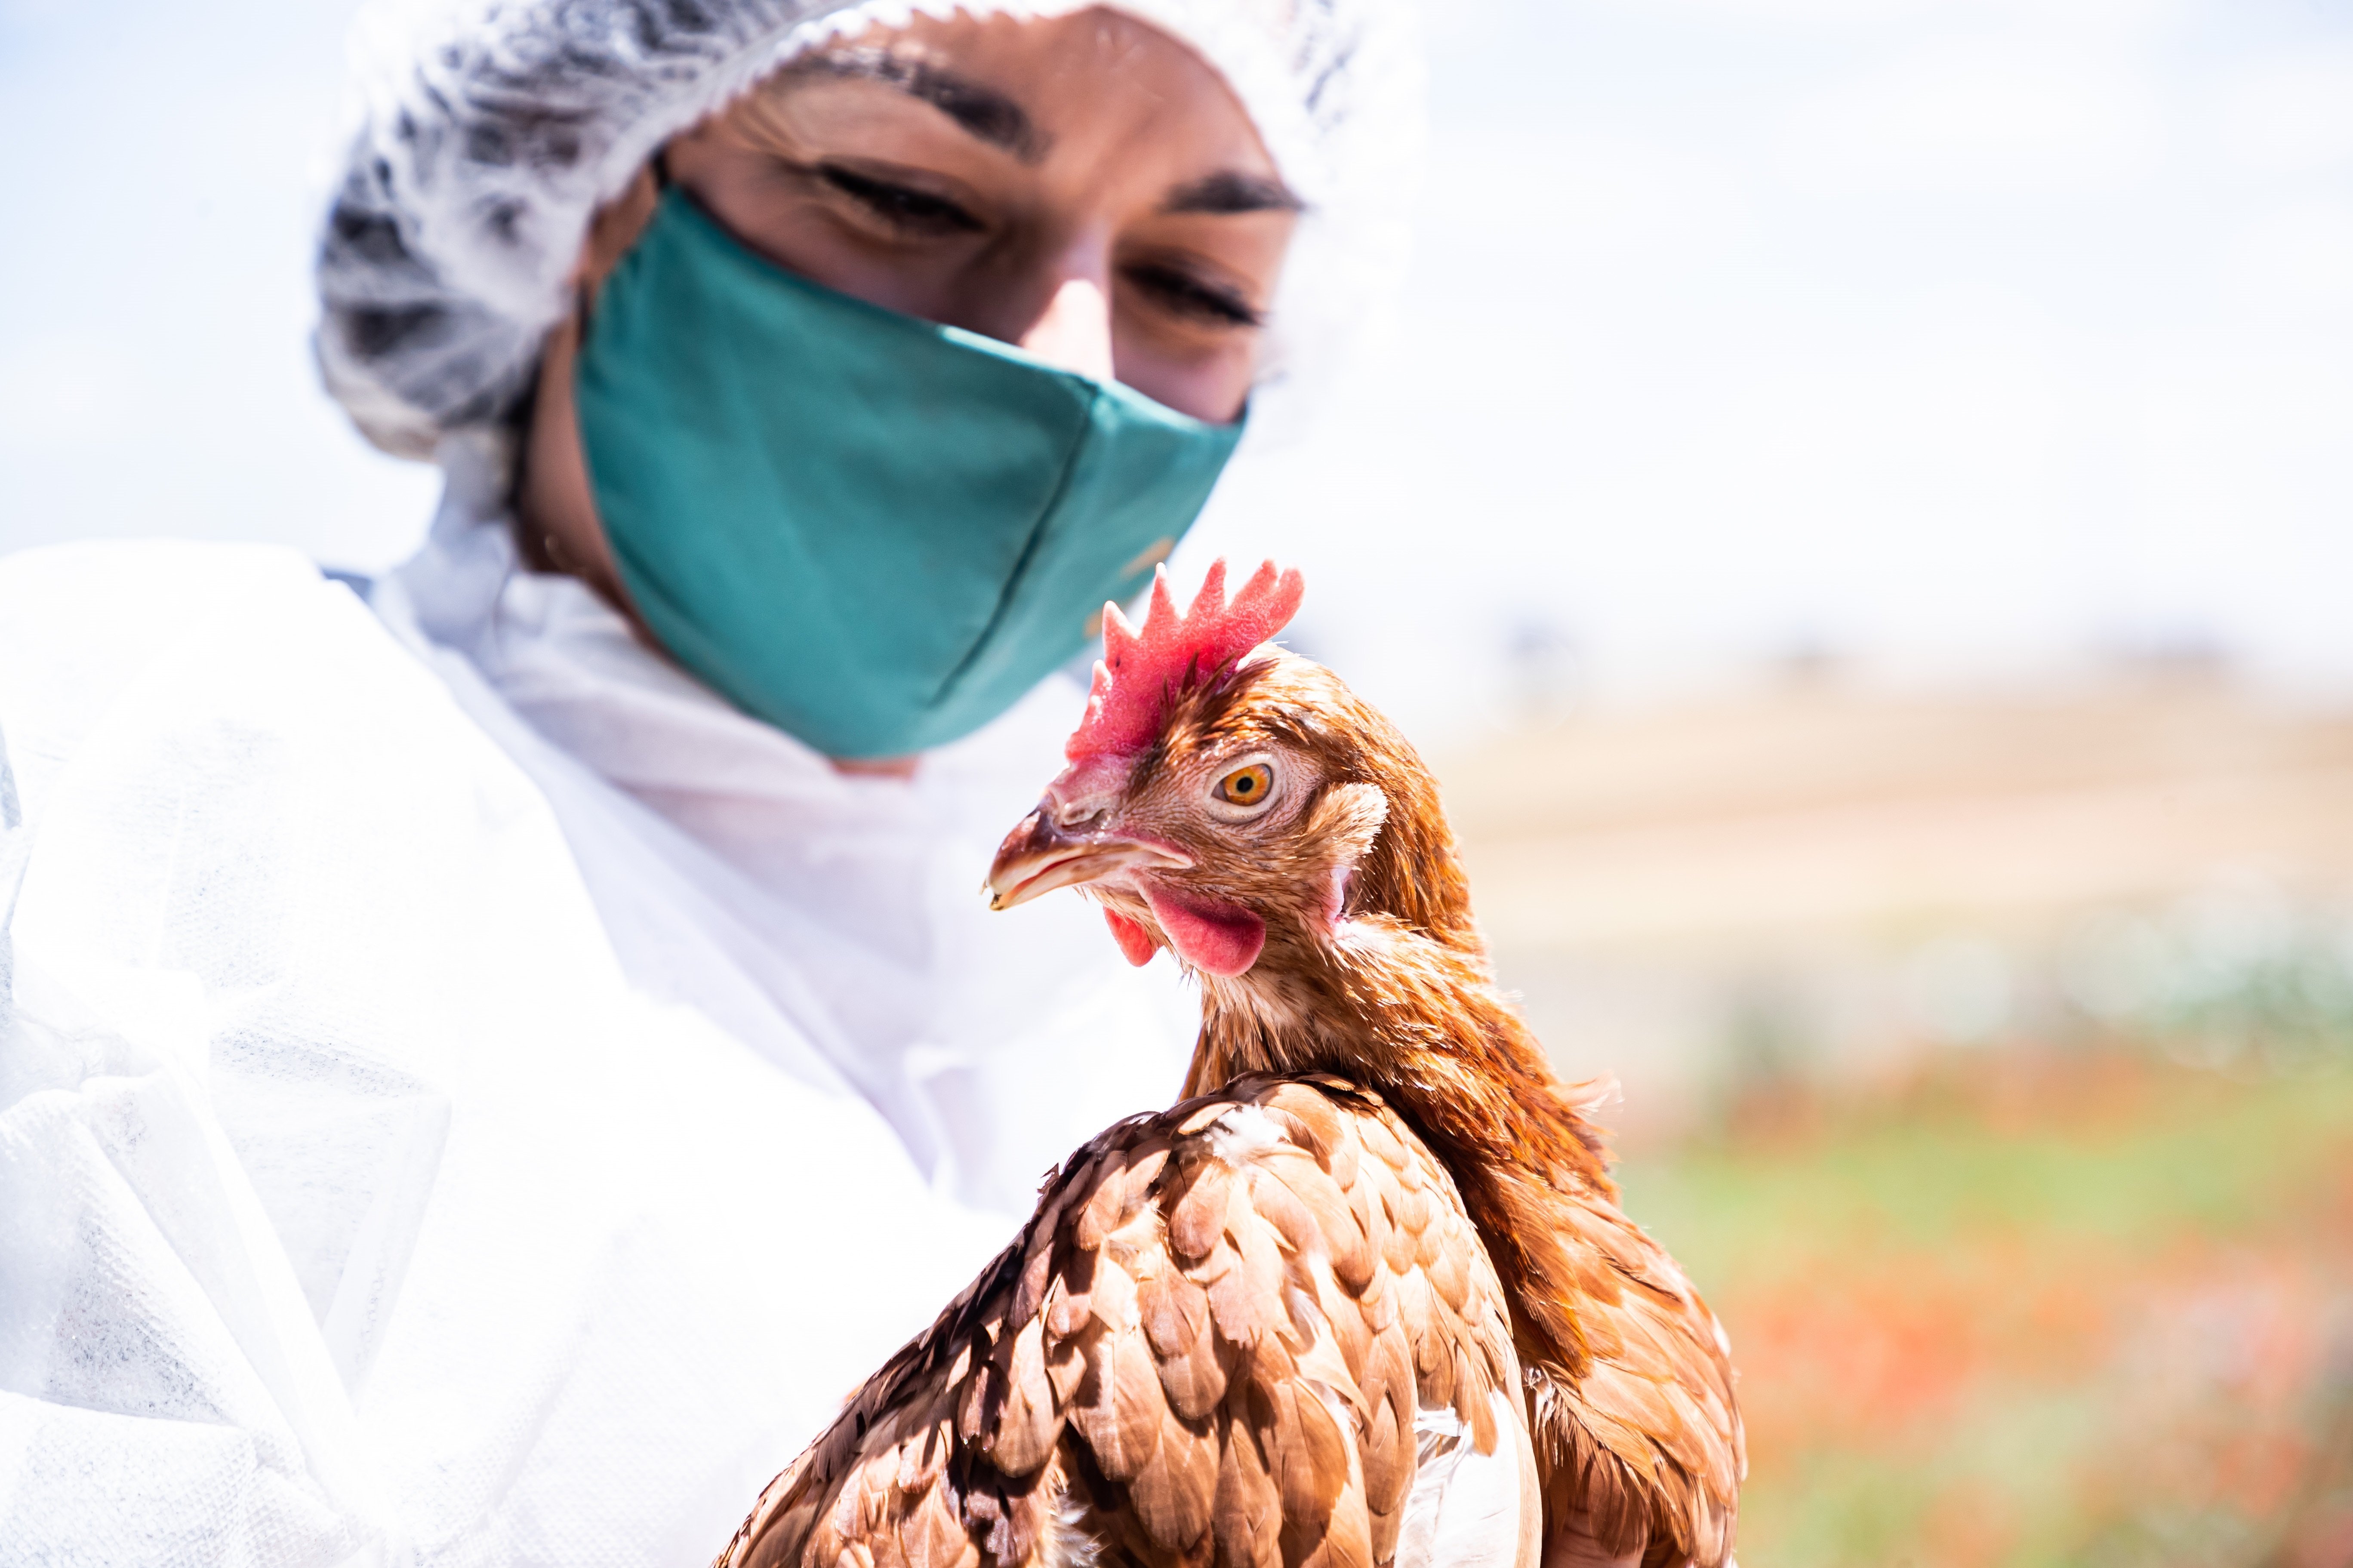 La OMS confirma un segundo caso de gripe aviar en humanos en España